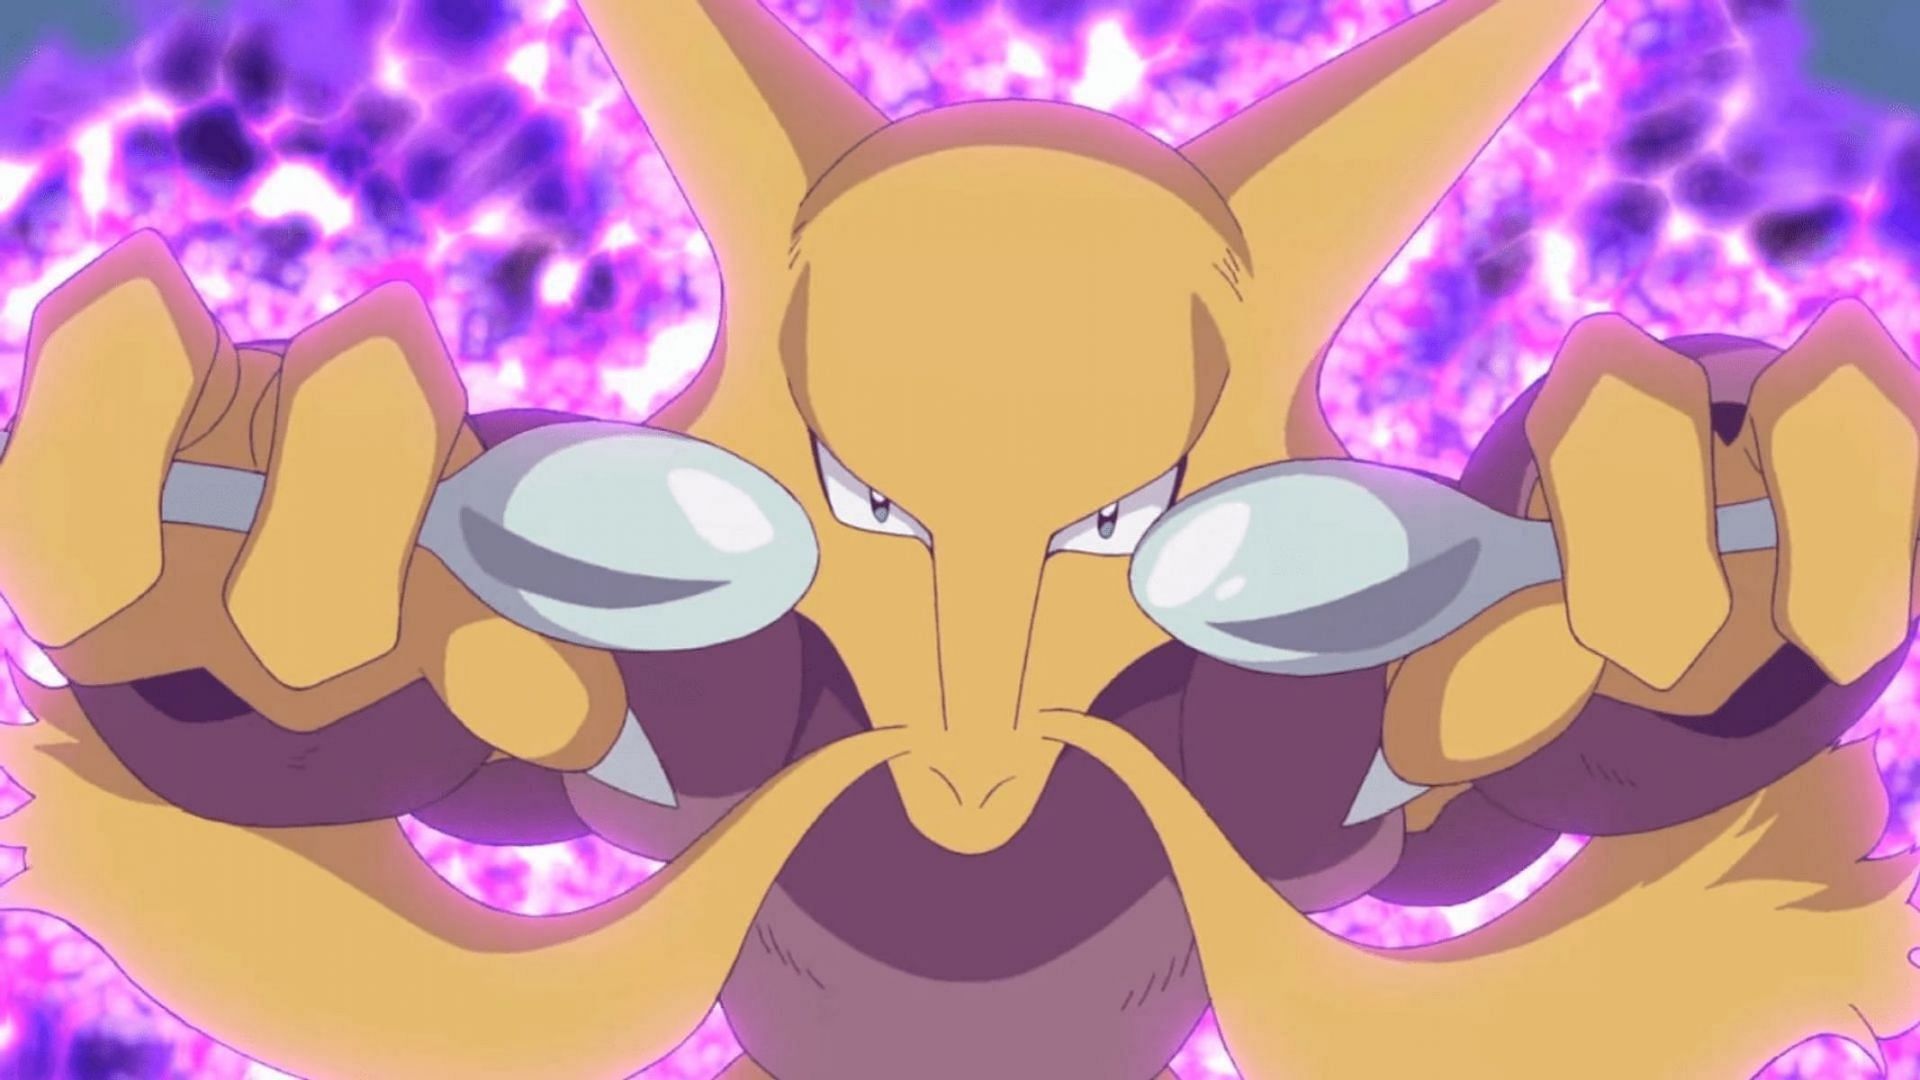 The Psychic-type Pokemon Alakazam as it appears in the Pokemon anime (Image via The Pokemon Company)